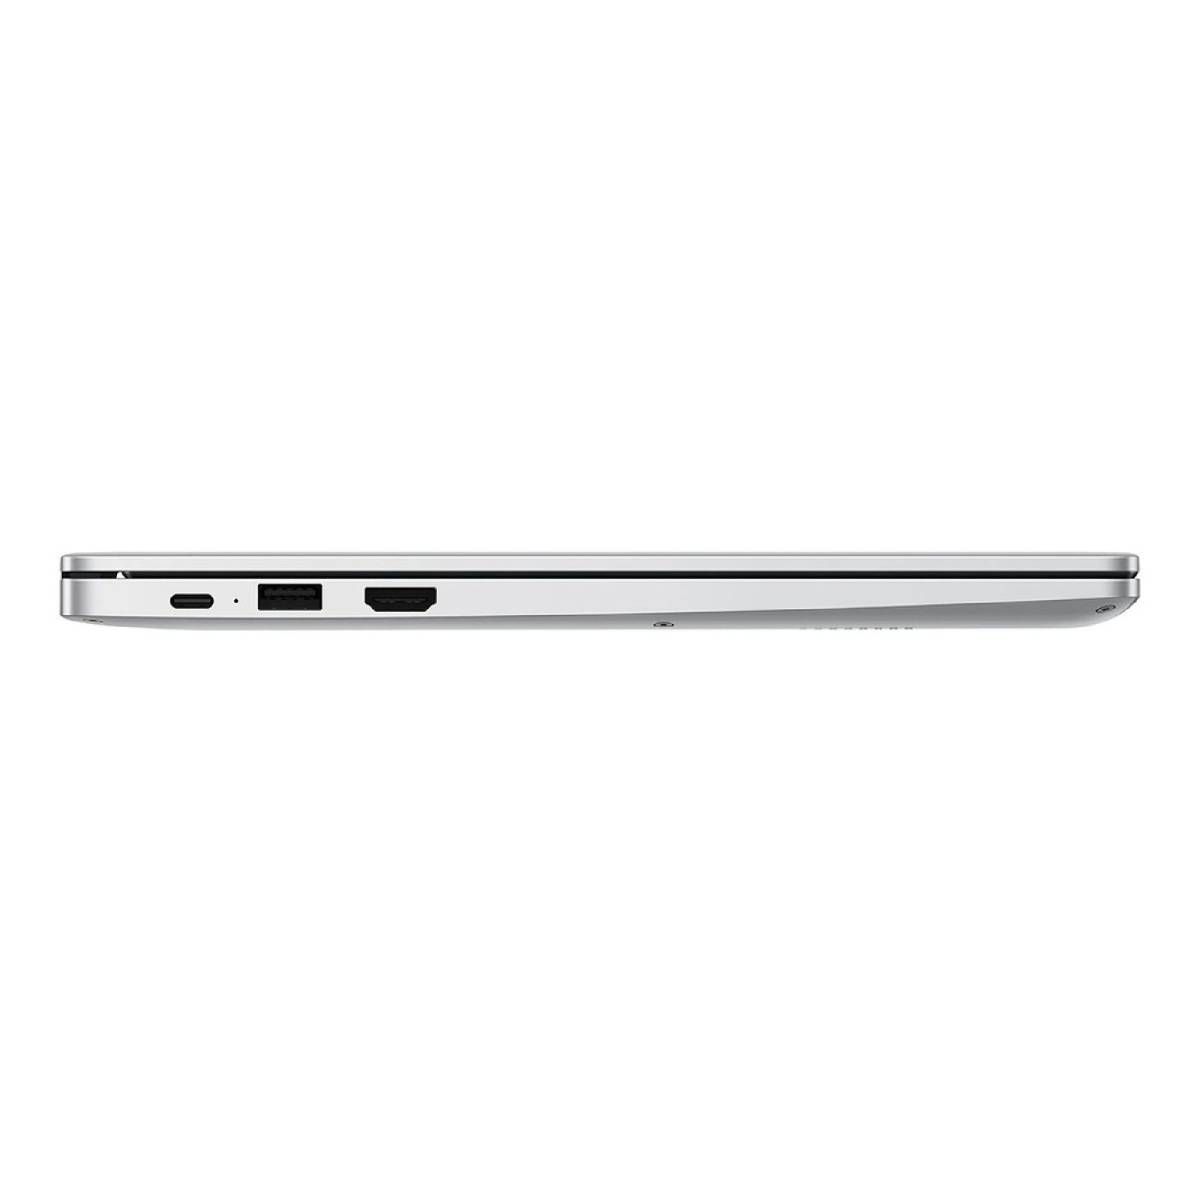 фото Ноутбук Huawei MateBook D14 NbD-WDI9 (Intel Core i3 1115G4 3000MHz/8Gb/256Gb SSD/14"/Intel Iris Xe Graphics/Wi-Fi/Bluetooth/Windows 11 Home) Серый